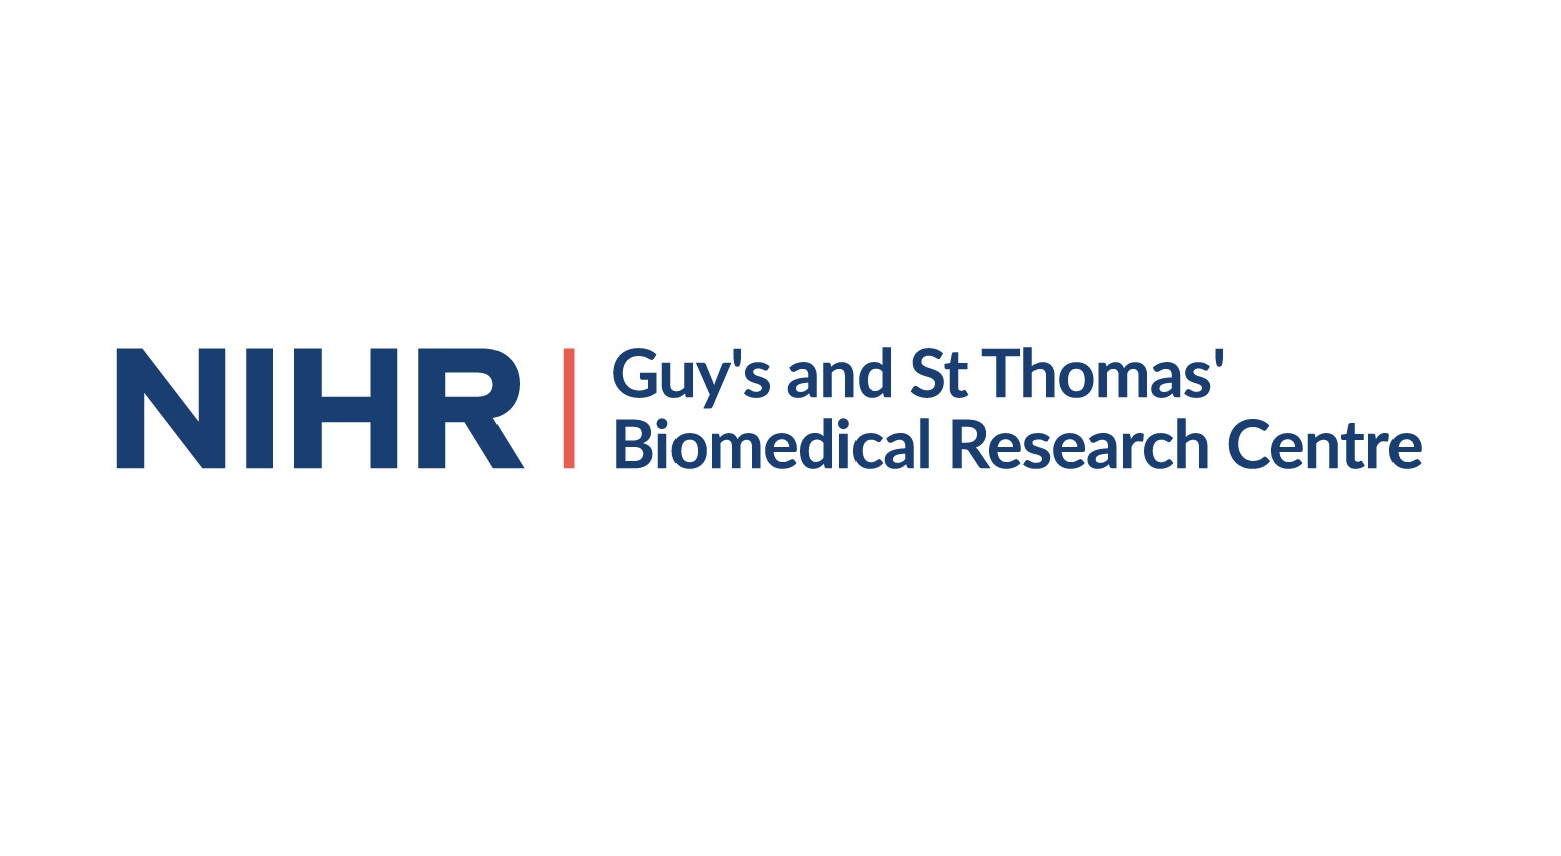 NIHR Biomedical Research Centre logo